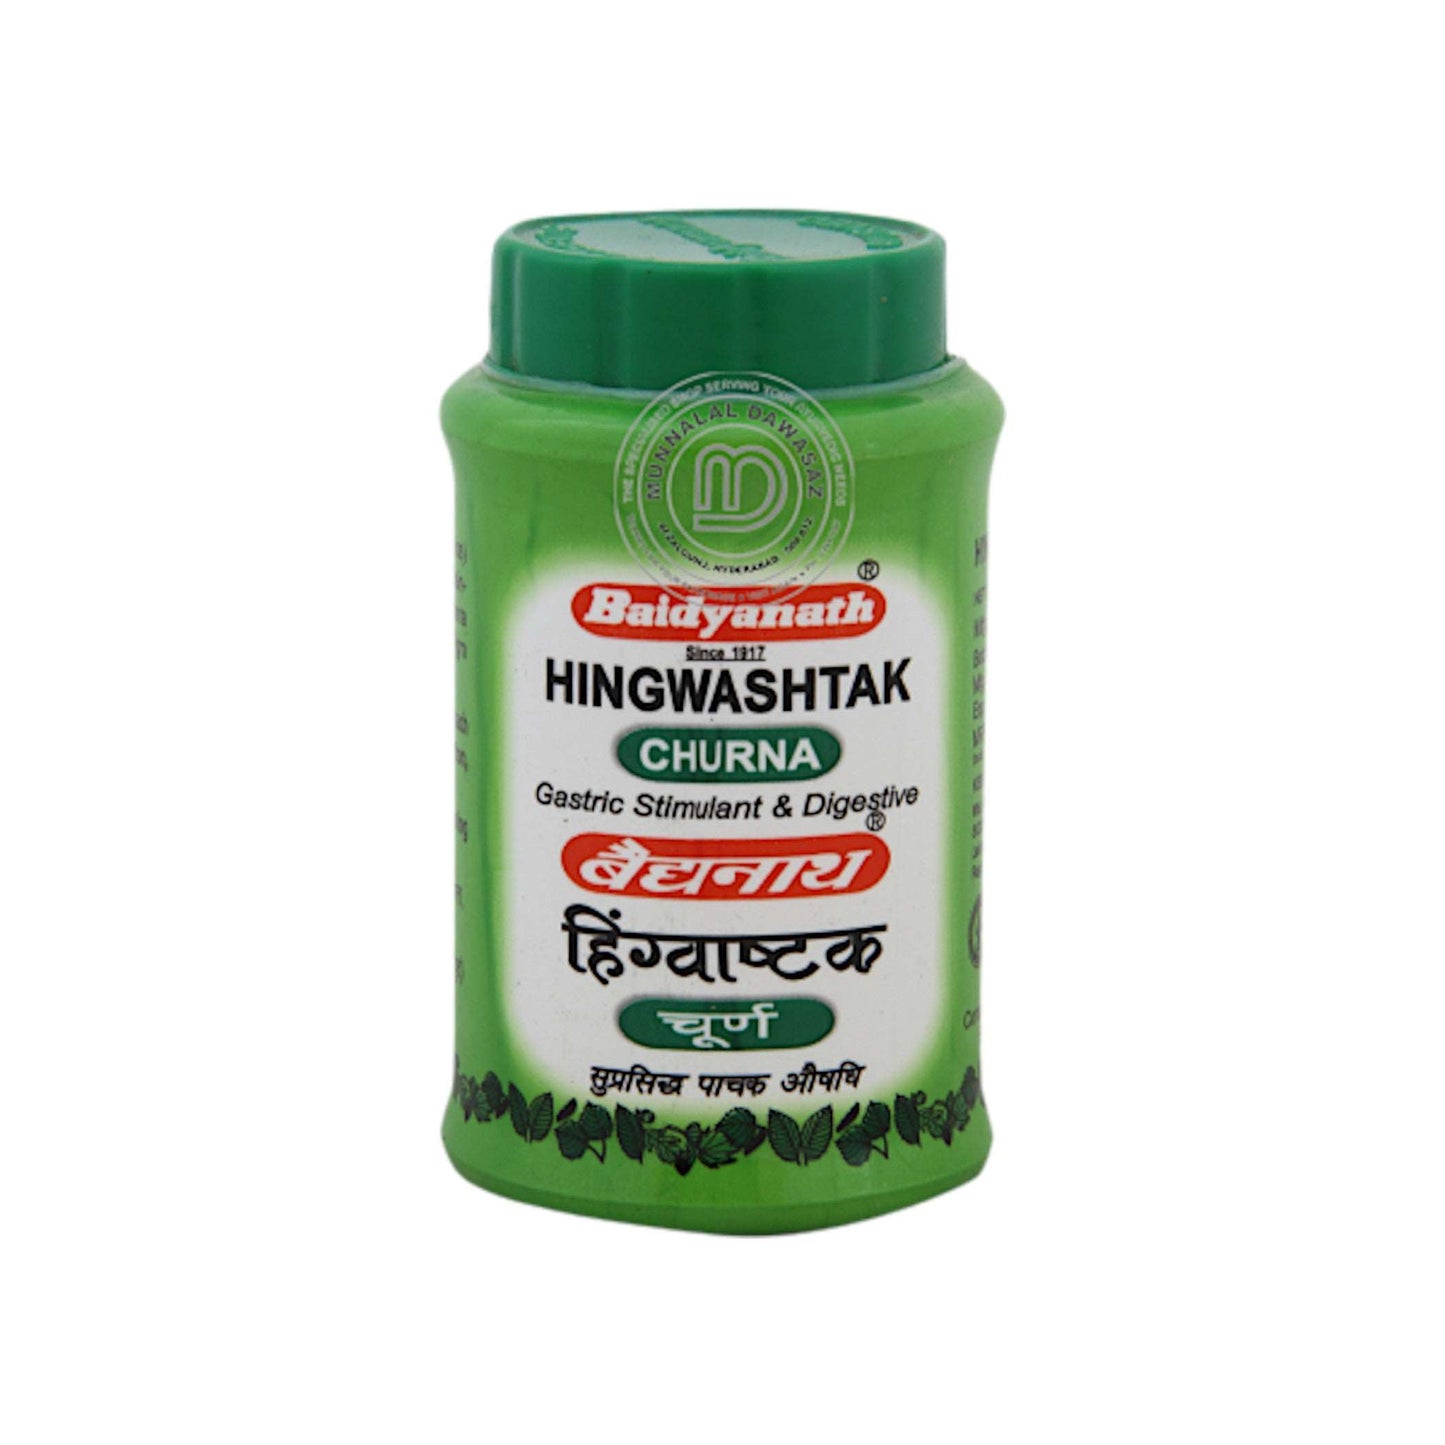 Image: Baidyanath Hingwashtak Churna Powder 60 g: Ayurvedic herbal powder for digestive wellness.